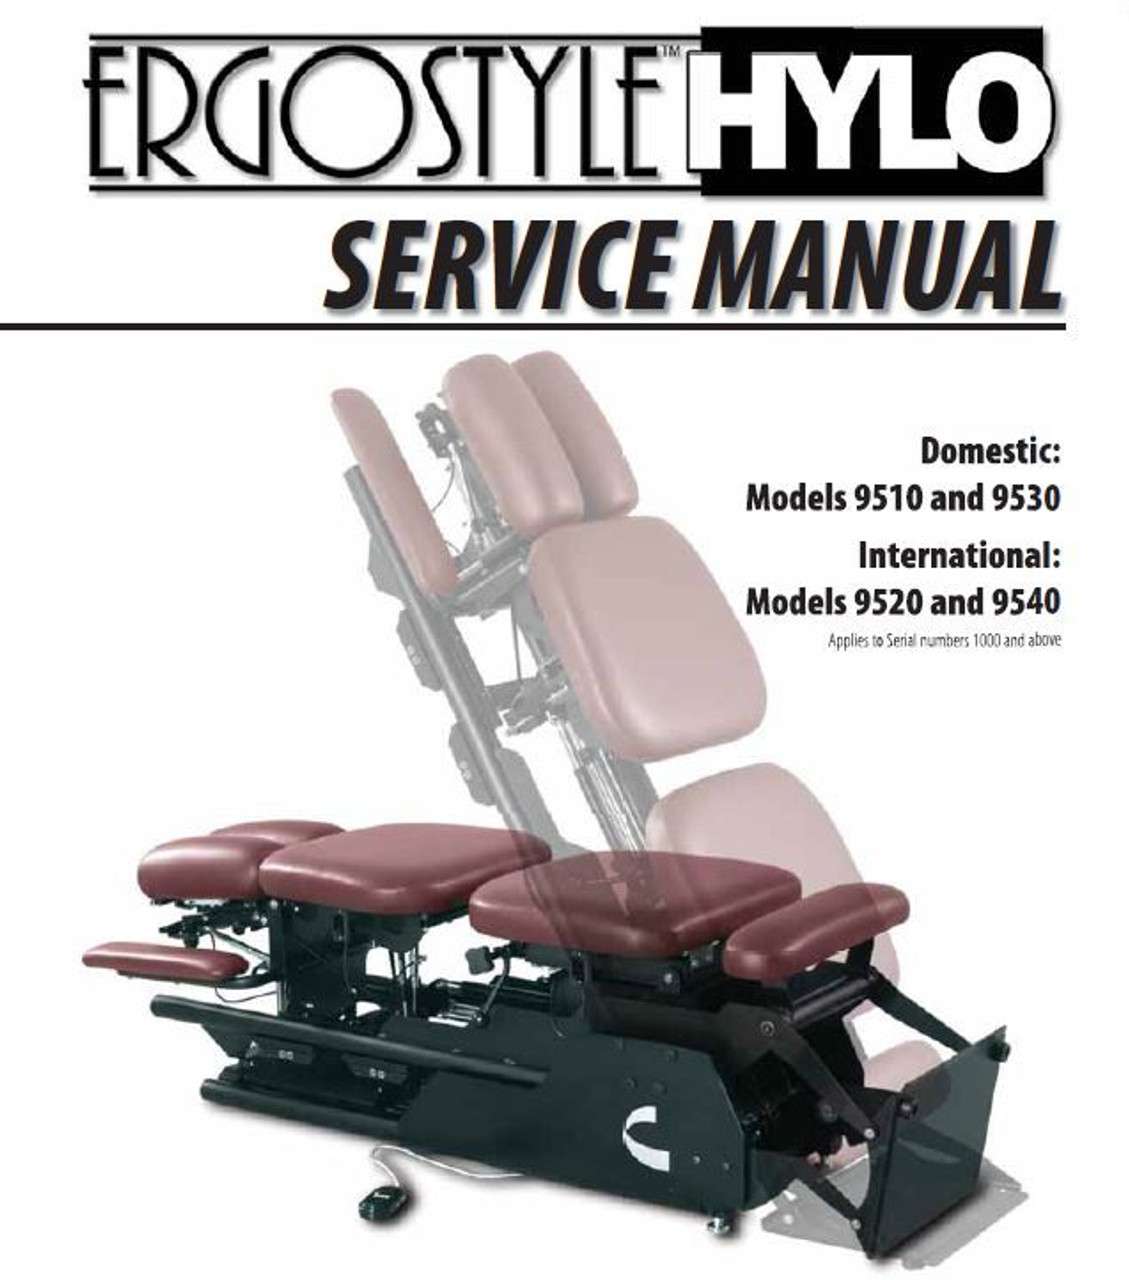 Ergostyle Hylo Service Manual